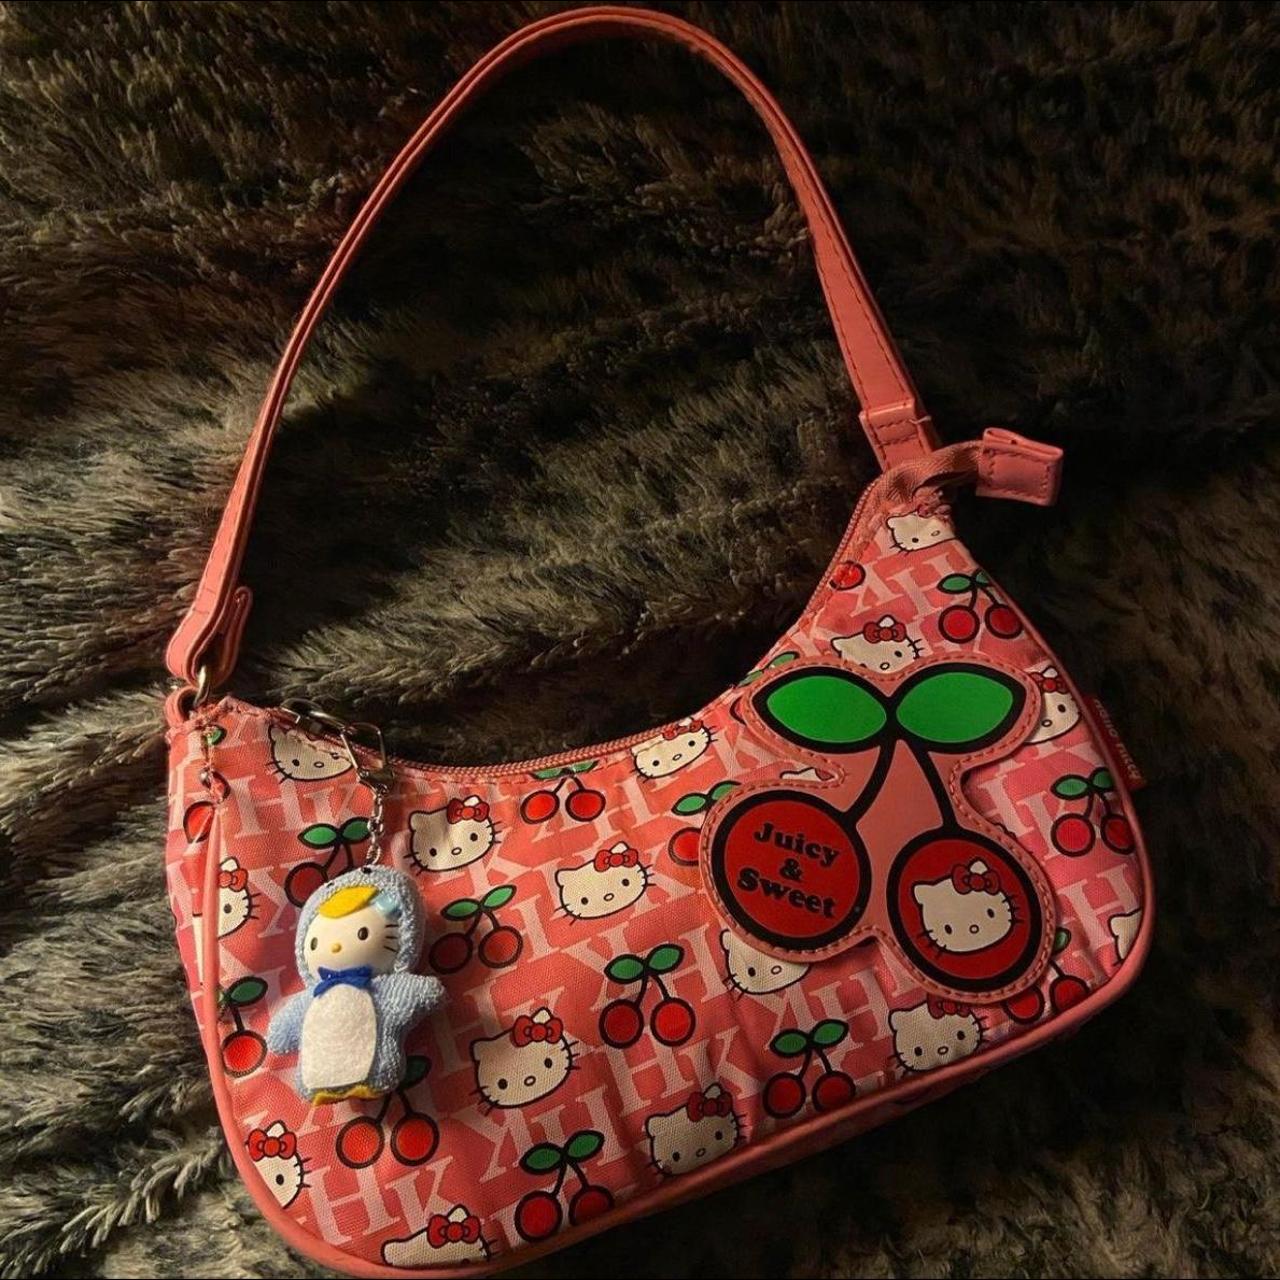 Amazing quality hello kitty messenger bag! 😊 It's - Depop